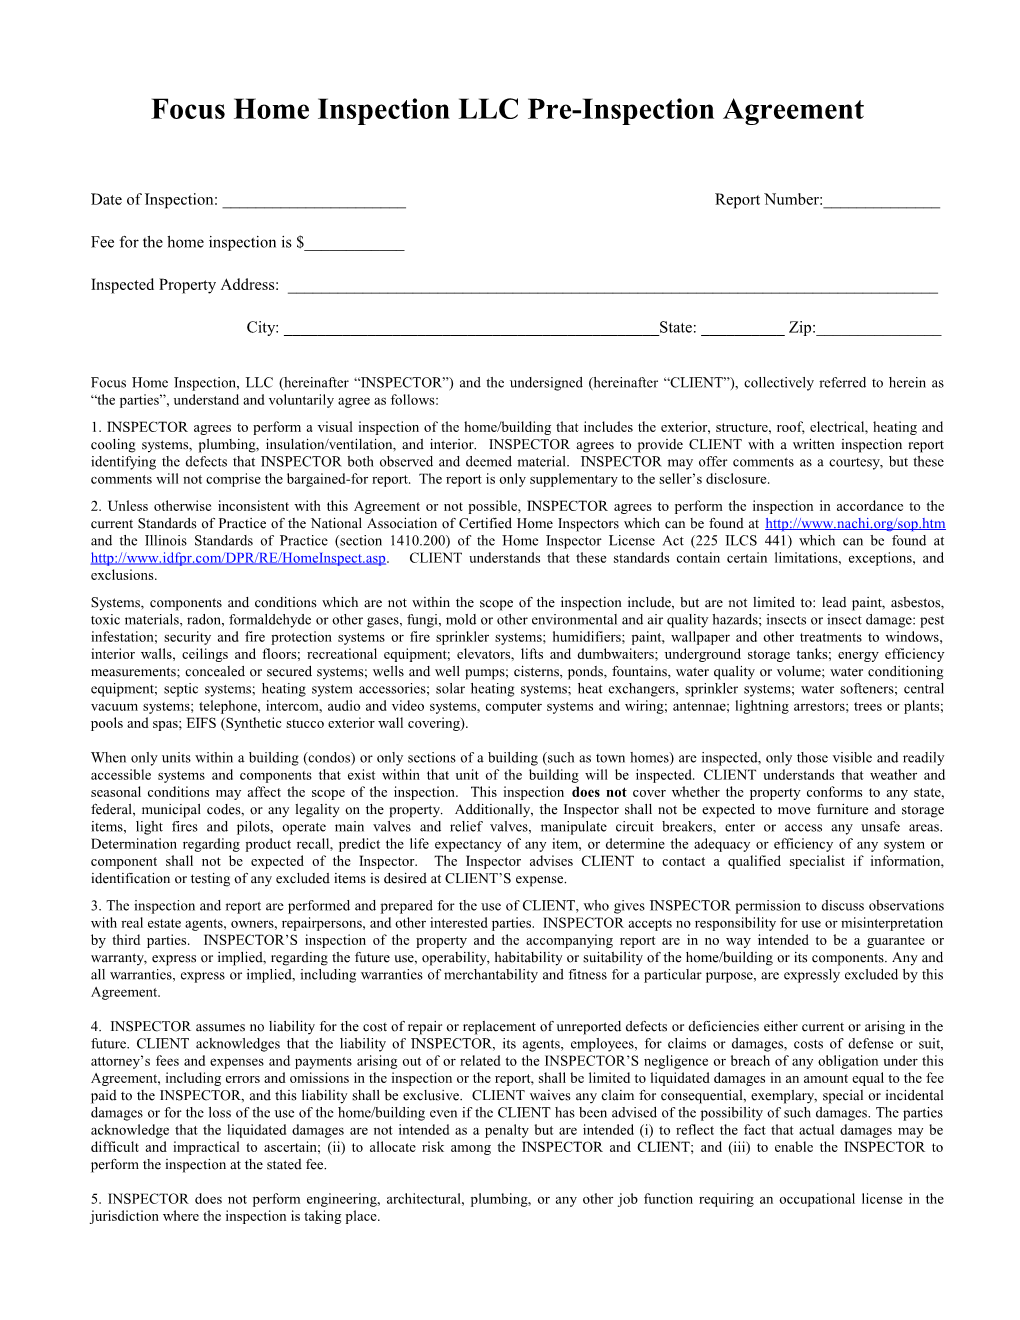 Focus Home Inspection LLC Pre-Inspection Agreement